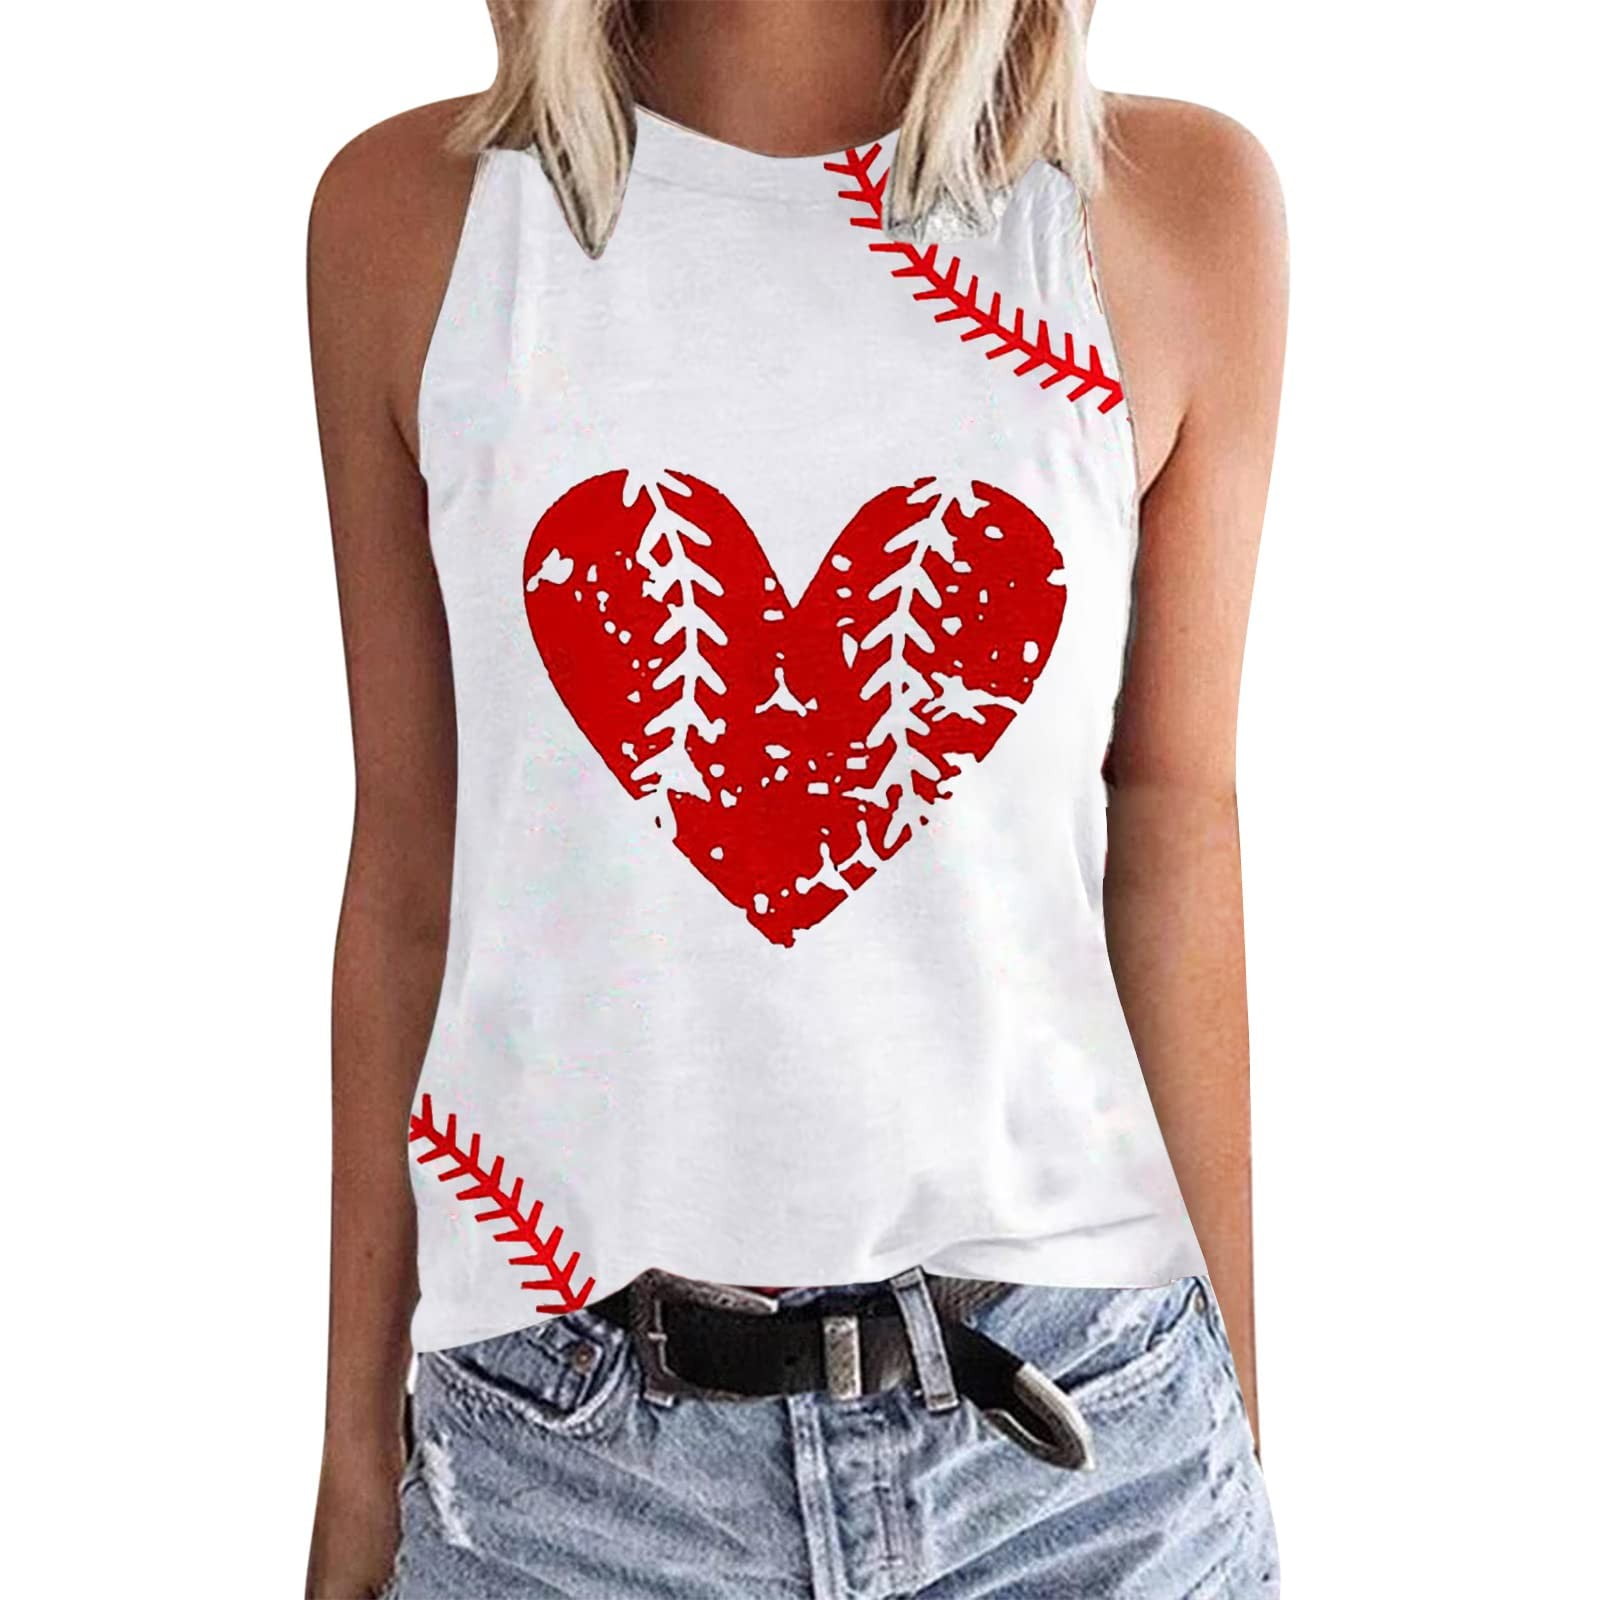 Baseball Tanks Top Women Baseball Graphic Vests Casual Sleeveless Baseball  Game Shirt 